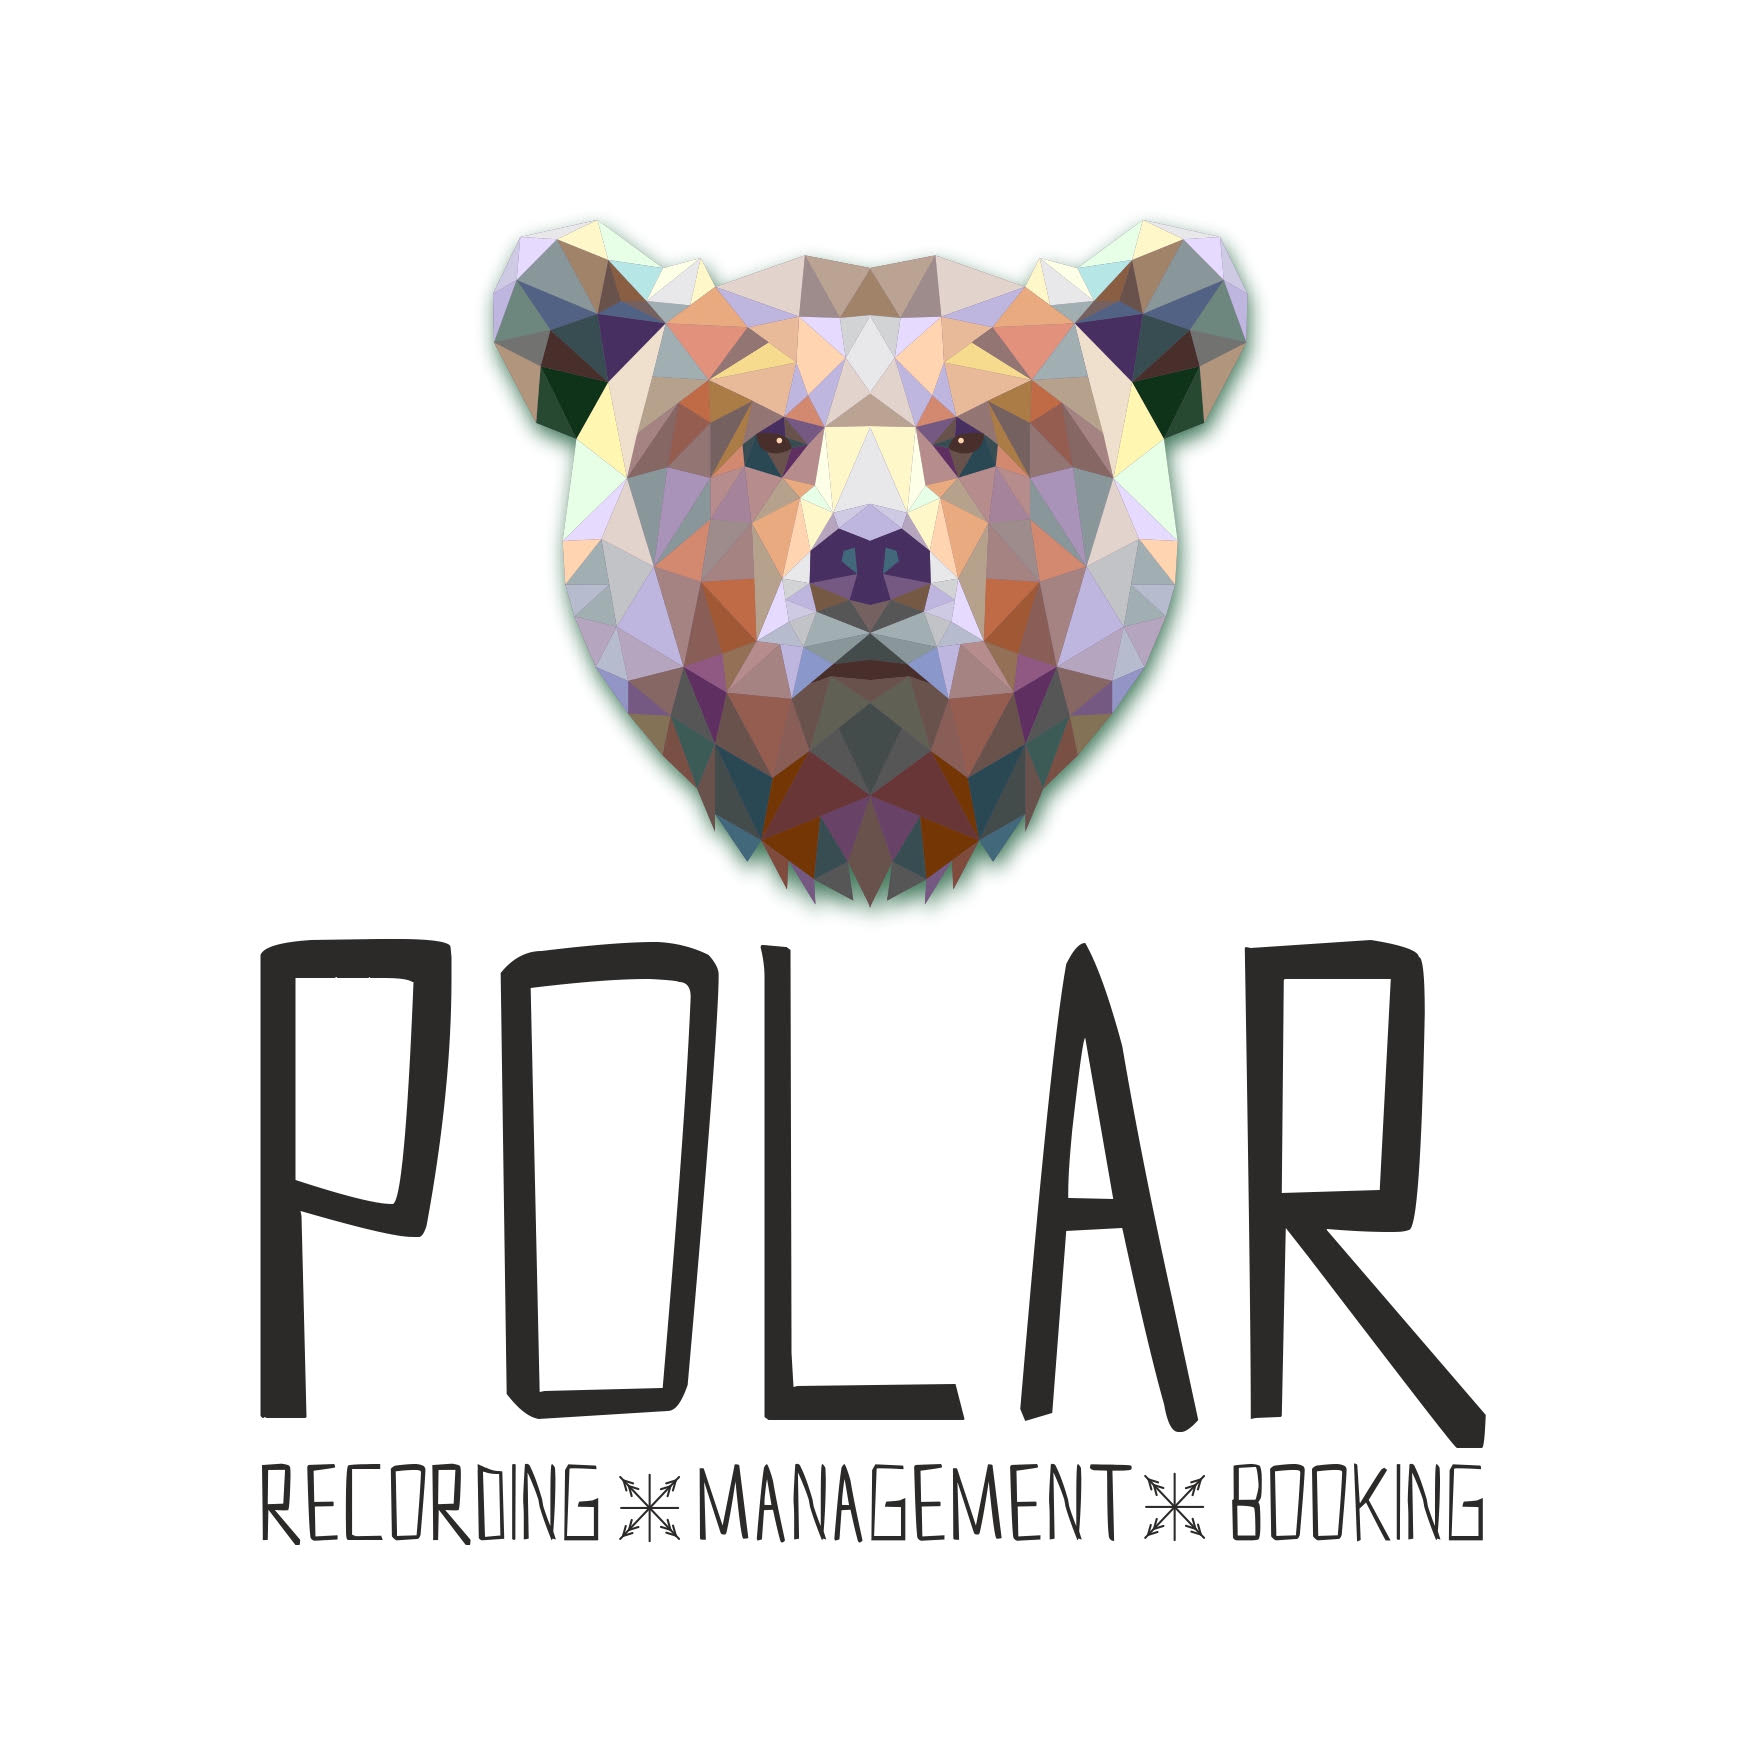 polar_management_booking